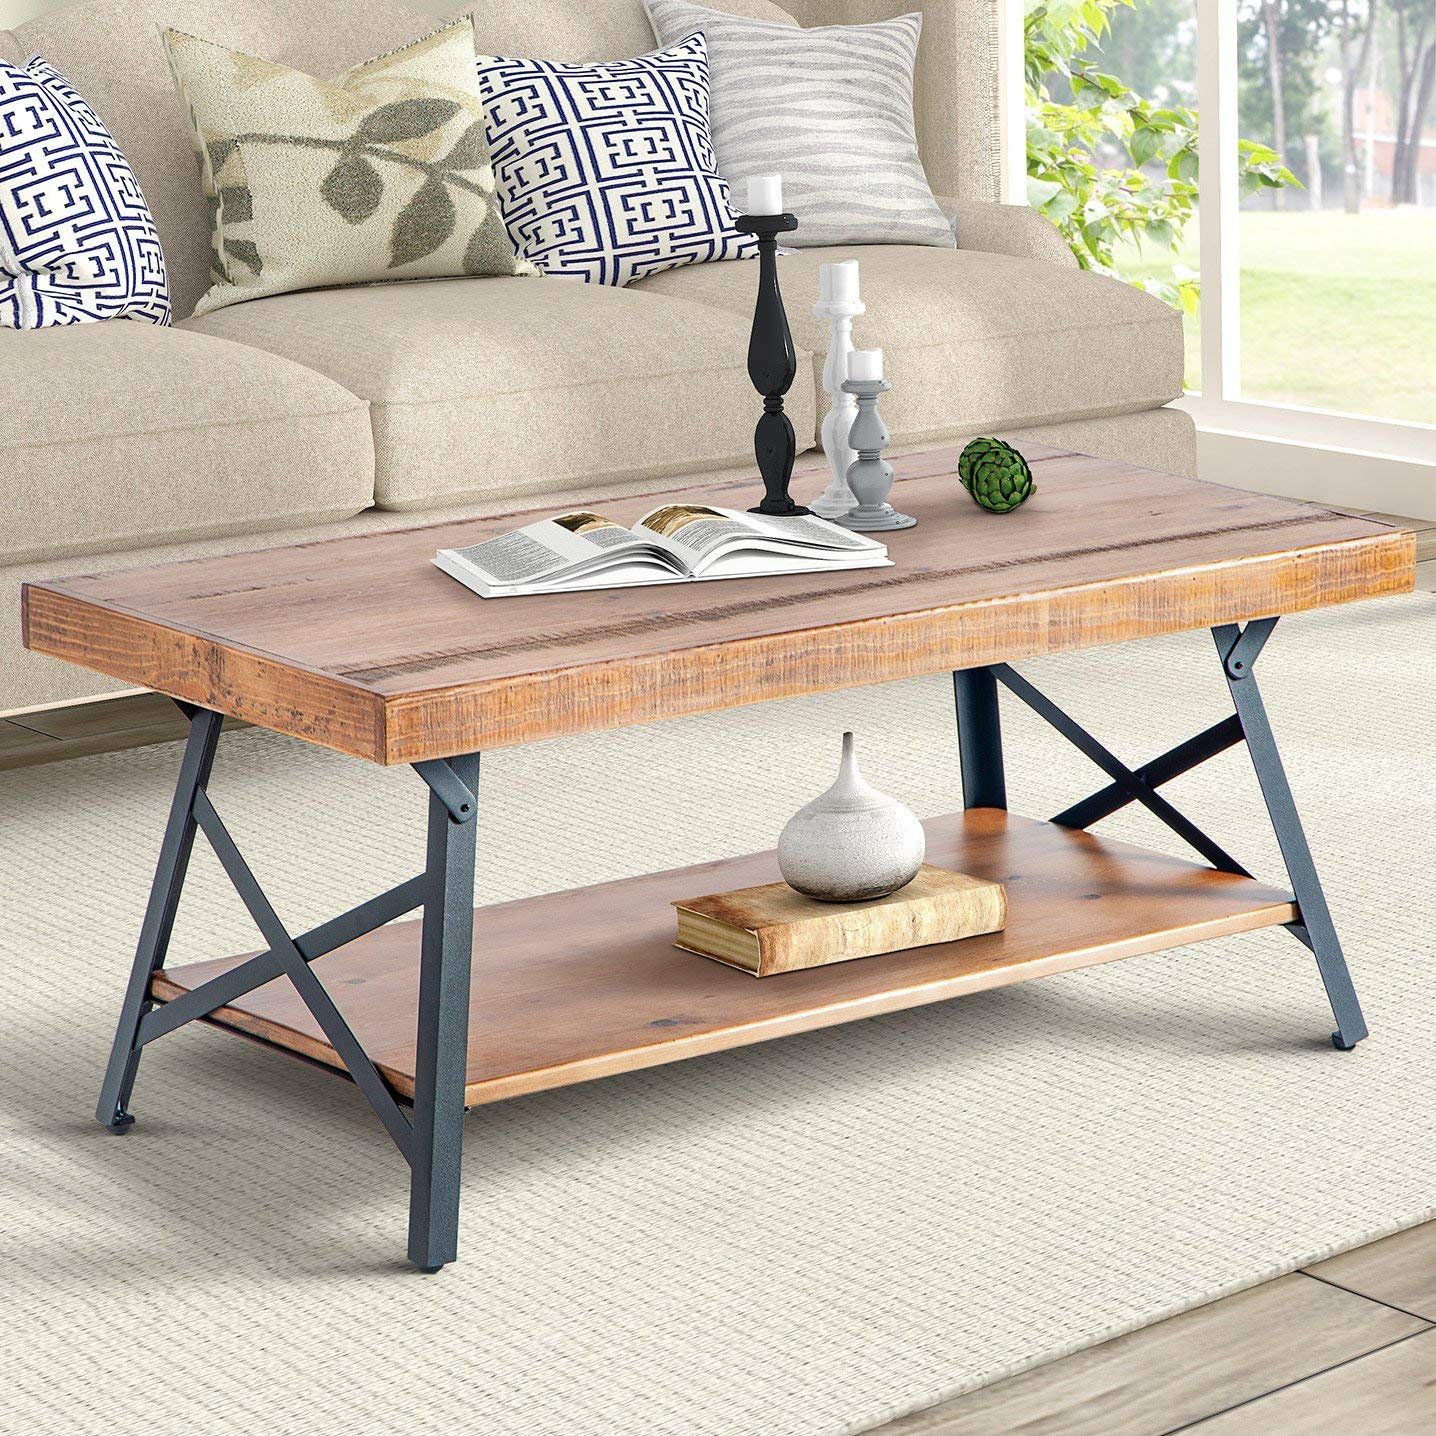 Rustic Brown Wood Coffee Table With Metal Legs | Buen Hogar Furniture Regarding Coffee Tables With Metal Legs (Photo 5 of 15)